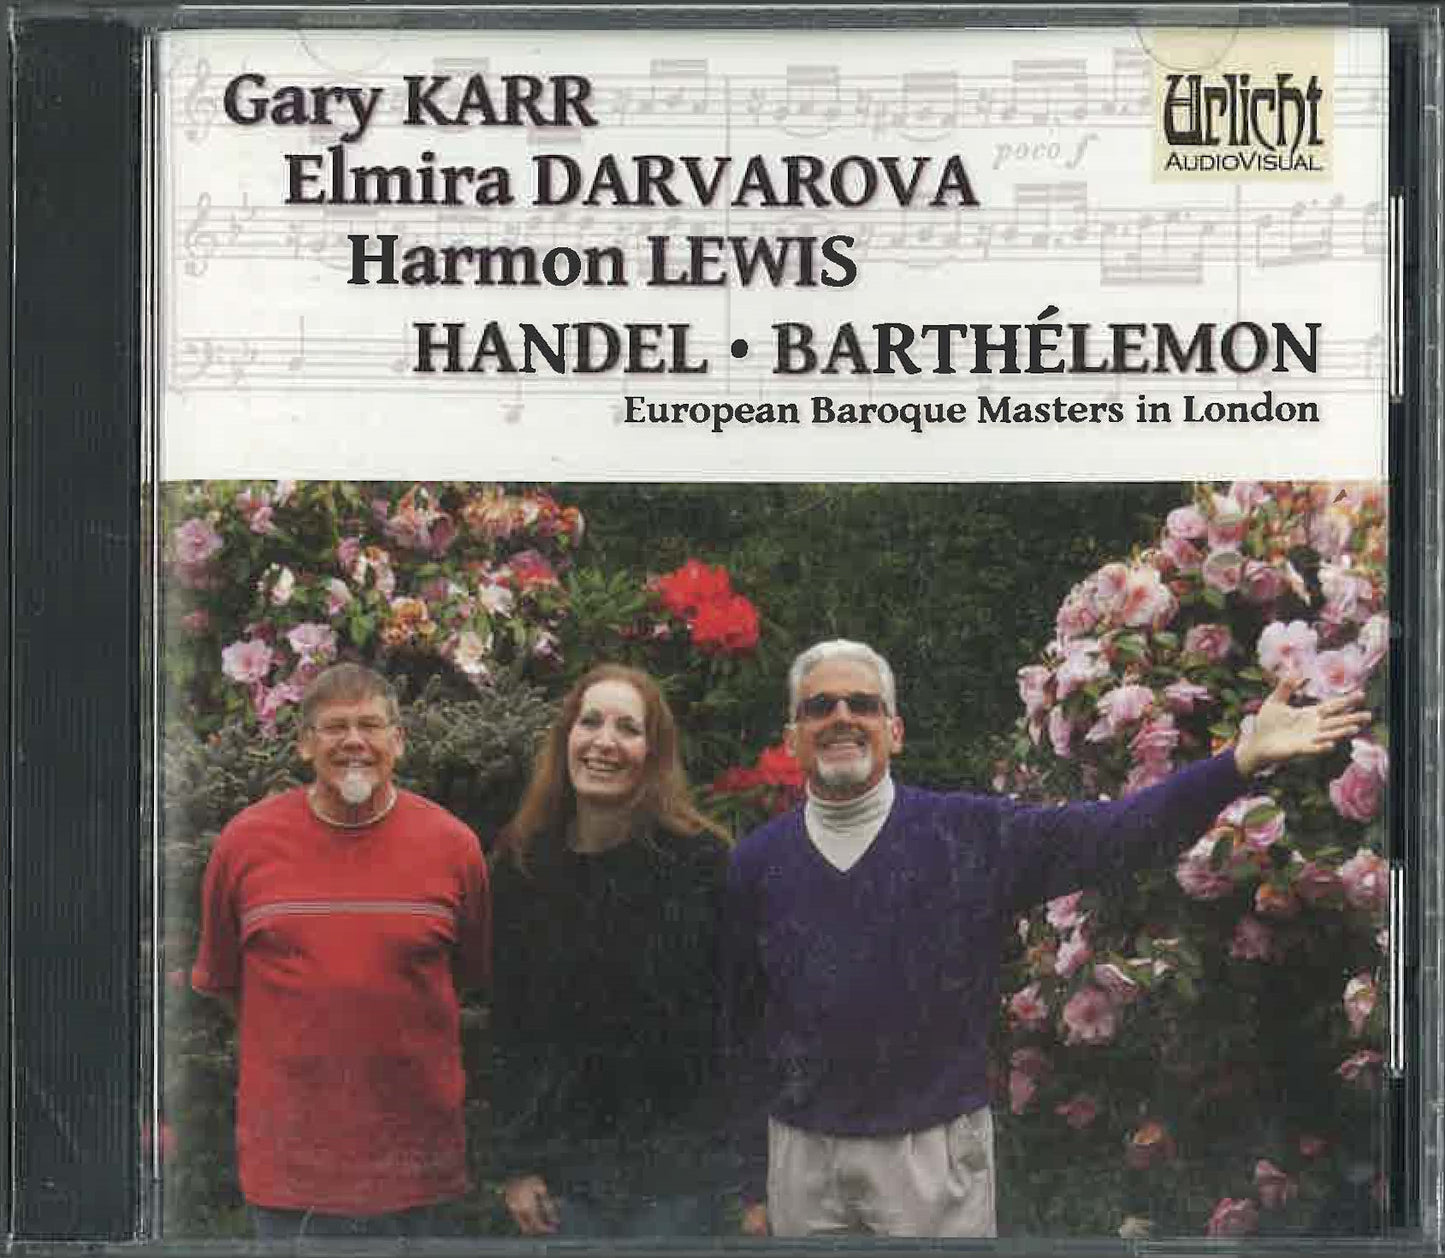 Gary Karr: European Baroque Masters in London